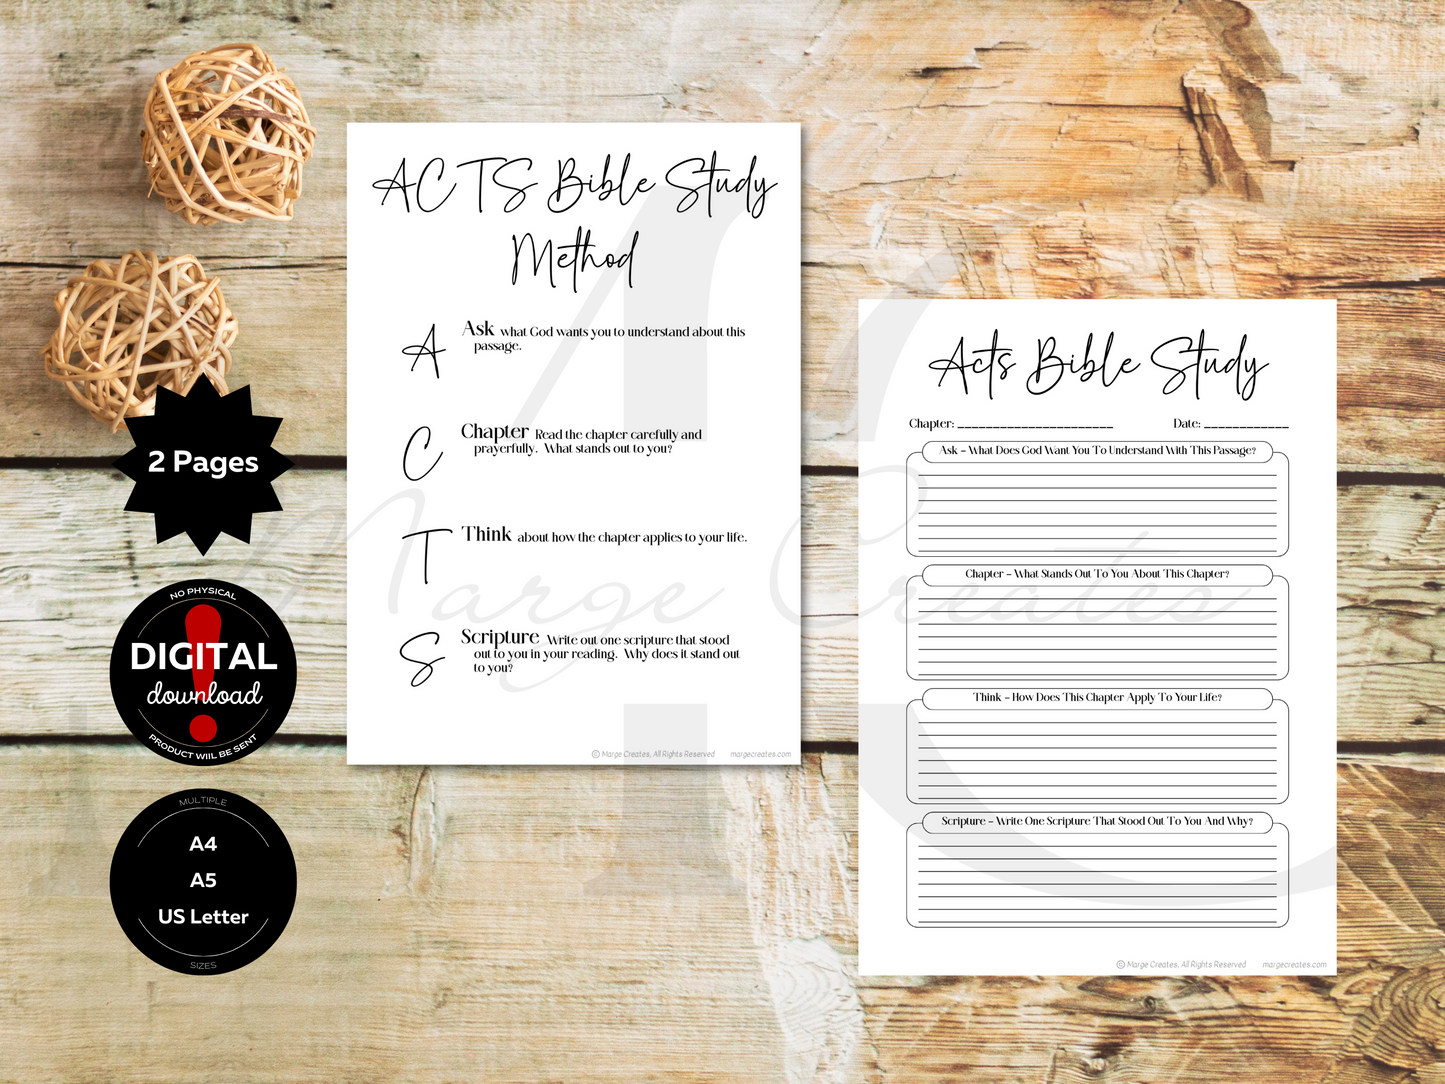 ACTS Bible Study Method Worksheet